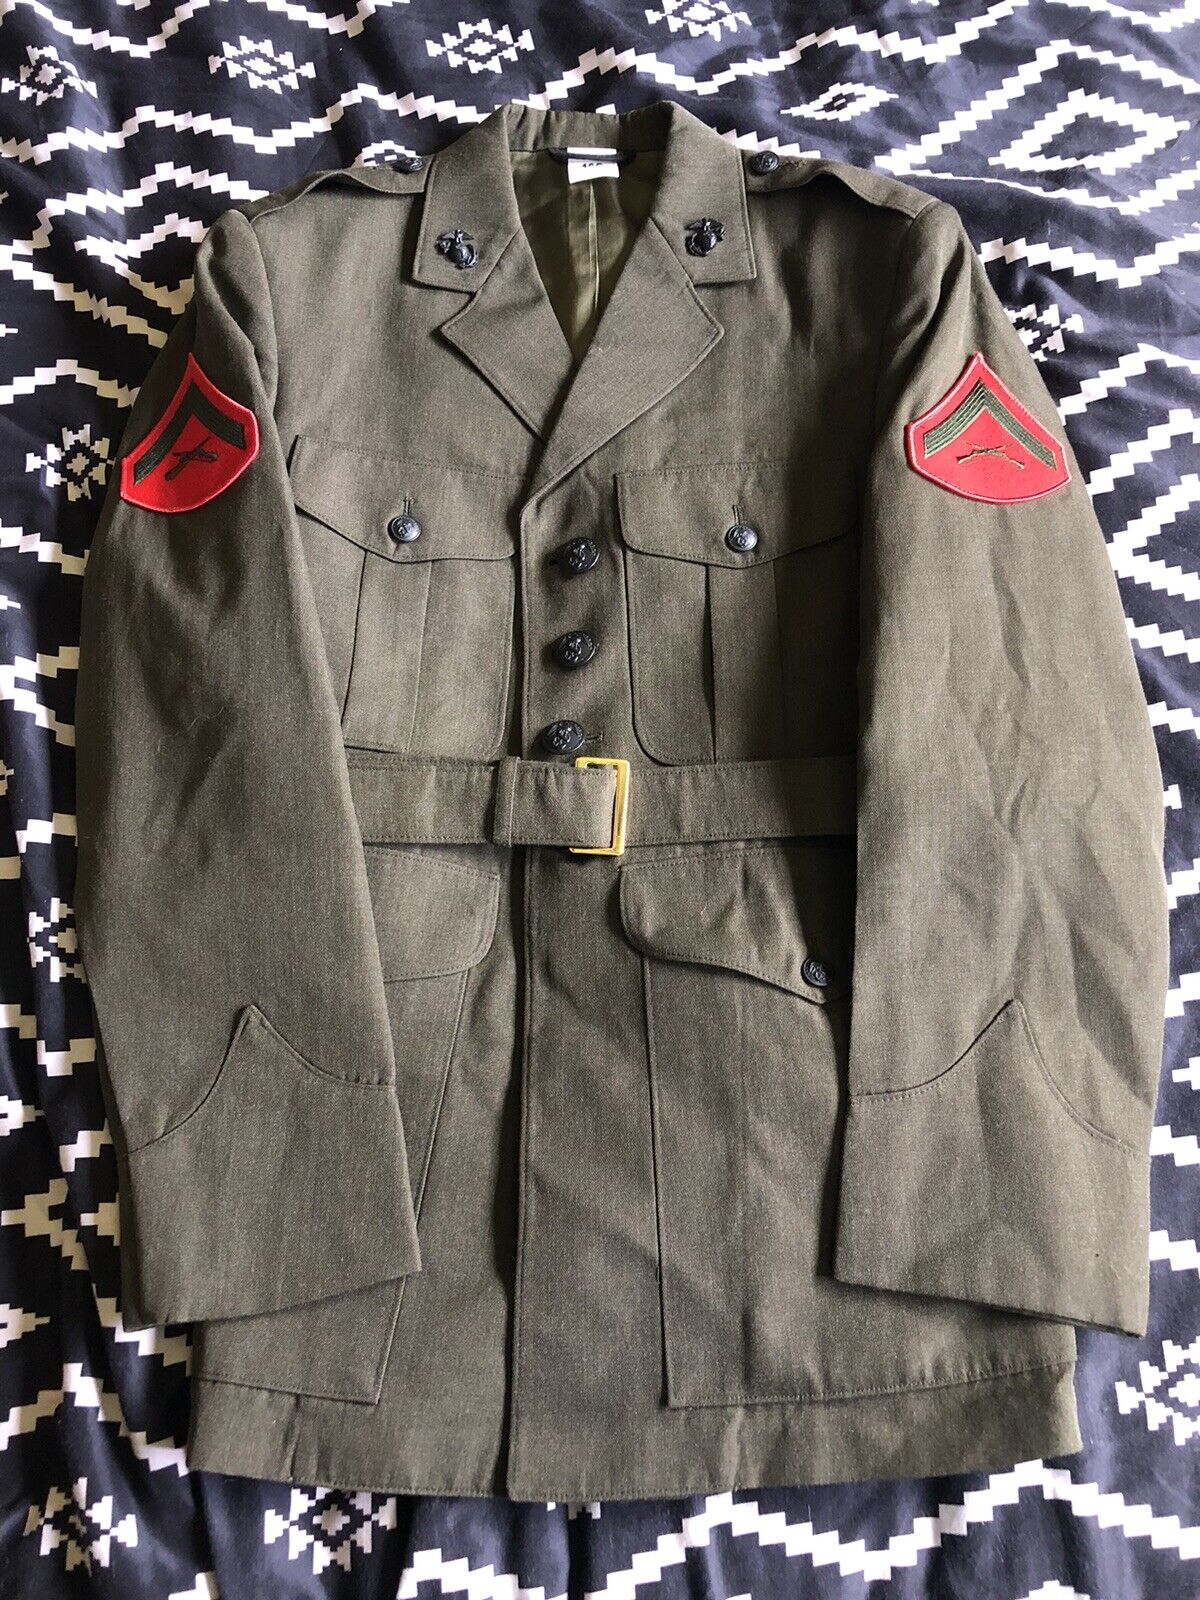 USGI Marine Corps USMC Green Service Alpha Dress Uniform Jacket Coat 40S